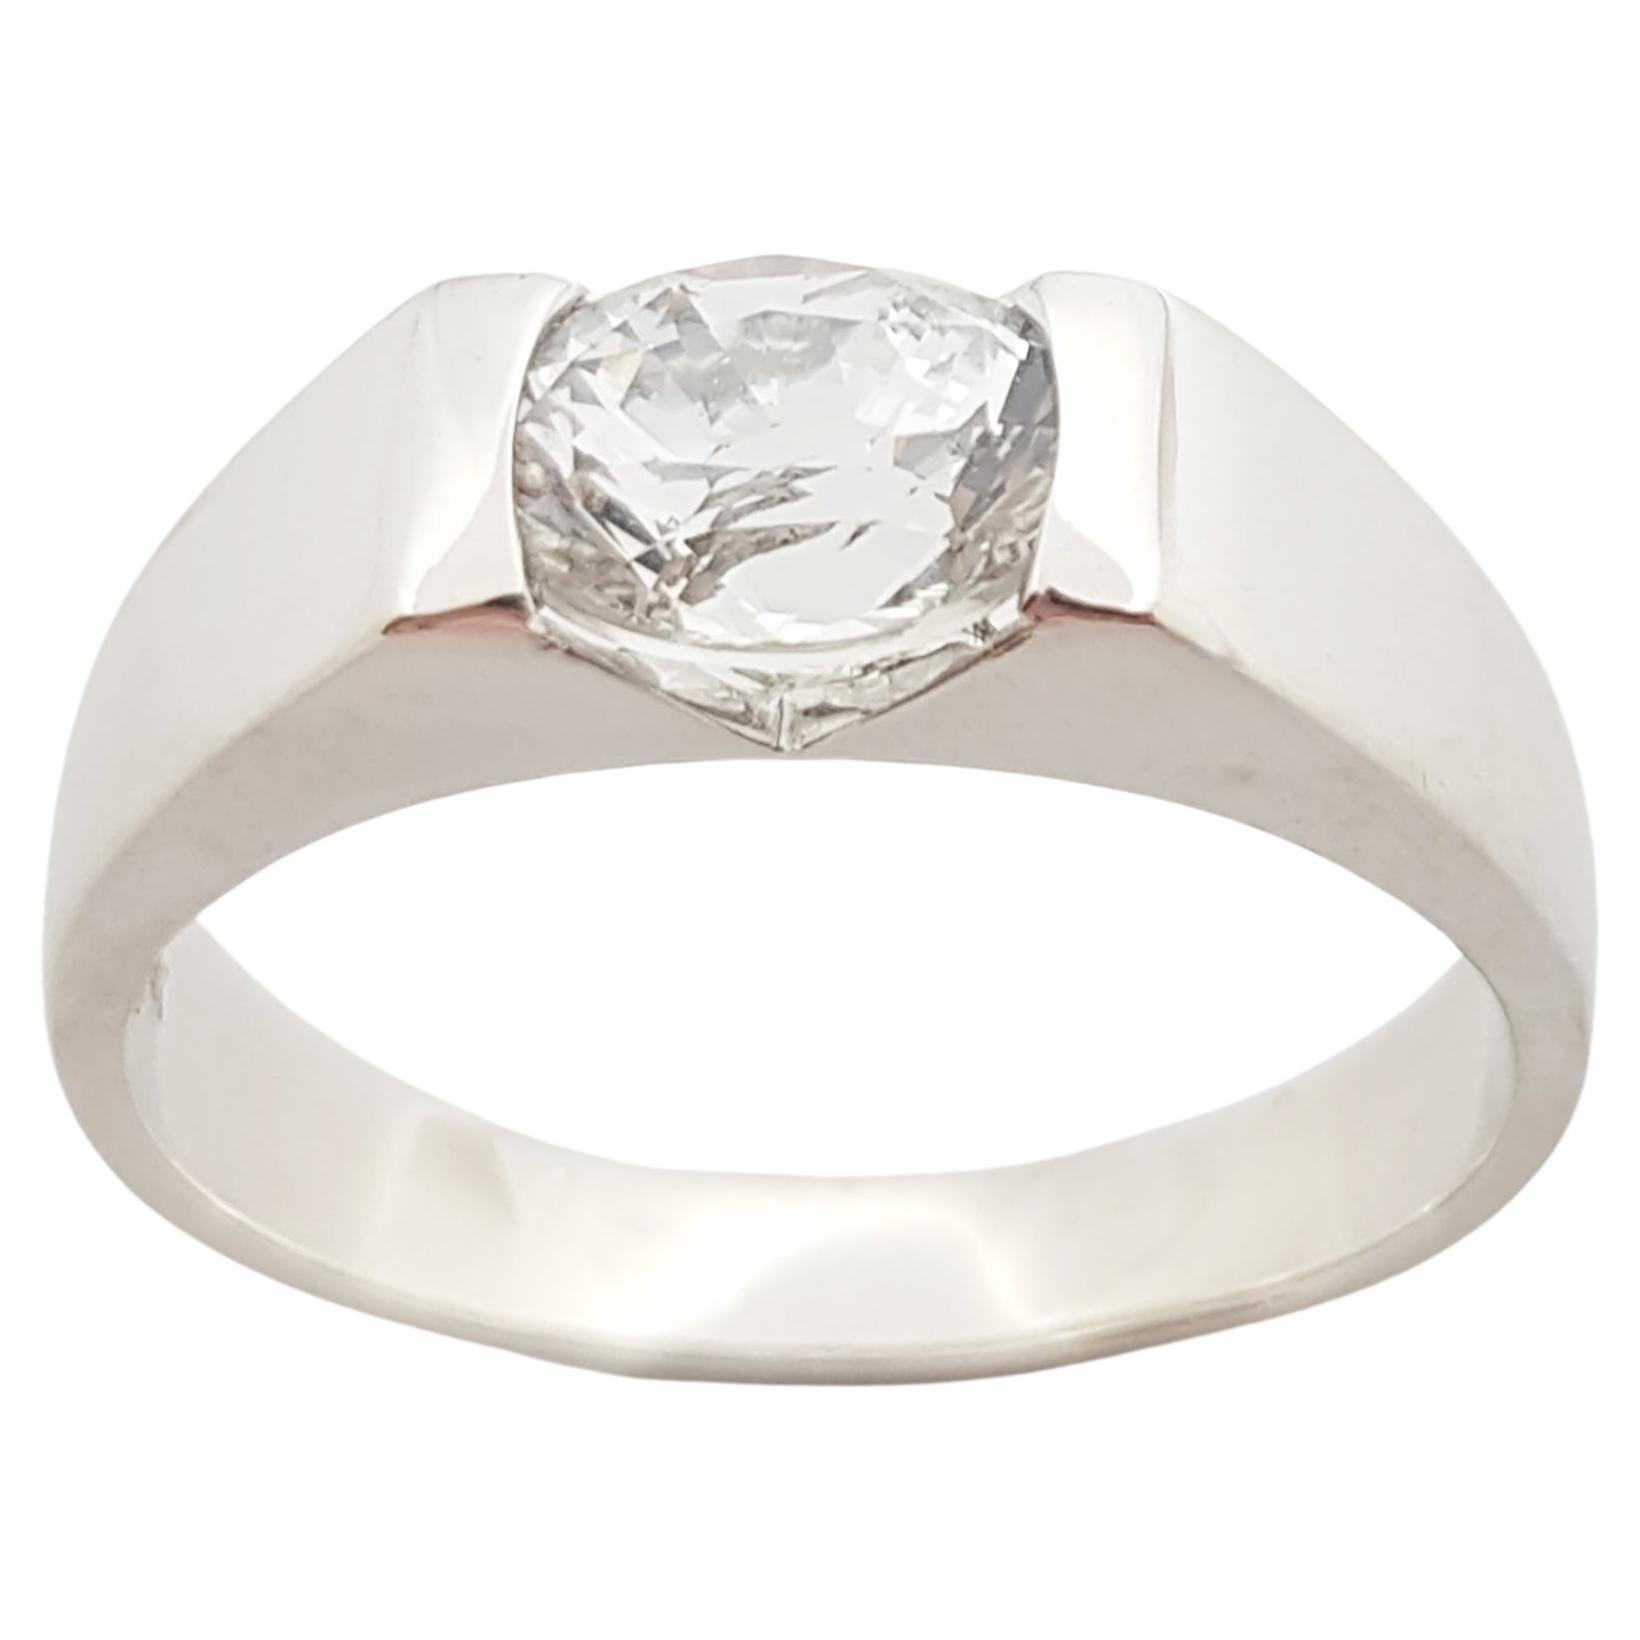 White Sapphire Engagement Ring Set in 14 Karat White Gold Settings For Sale